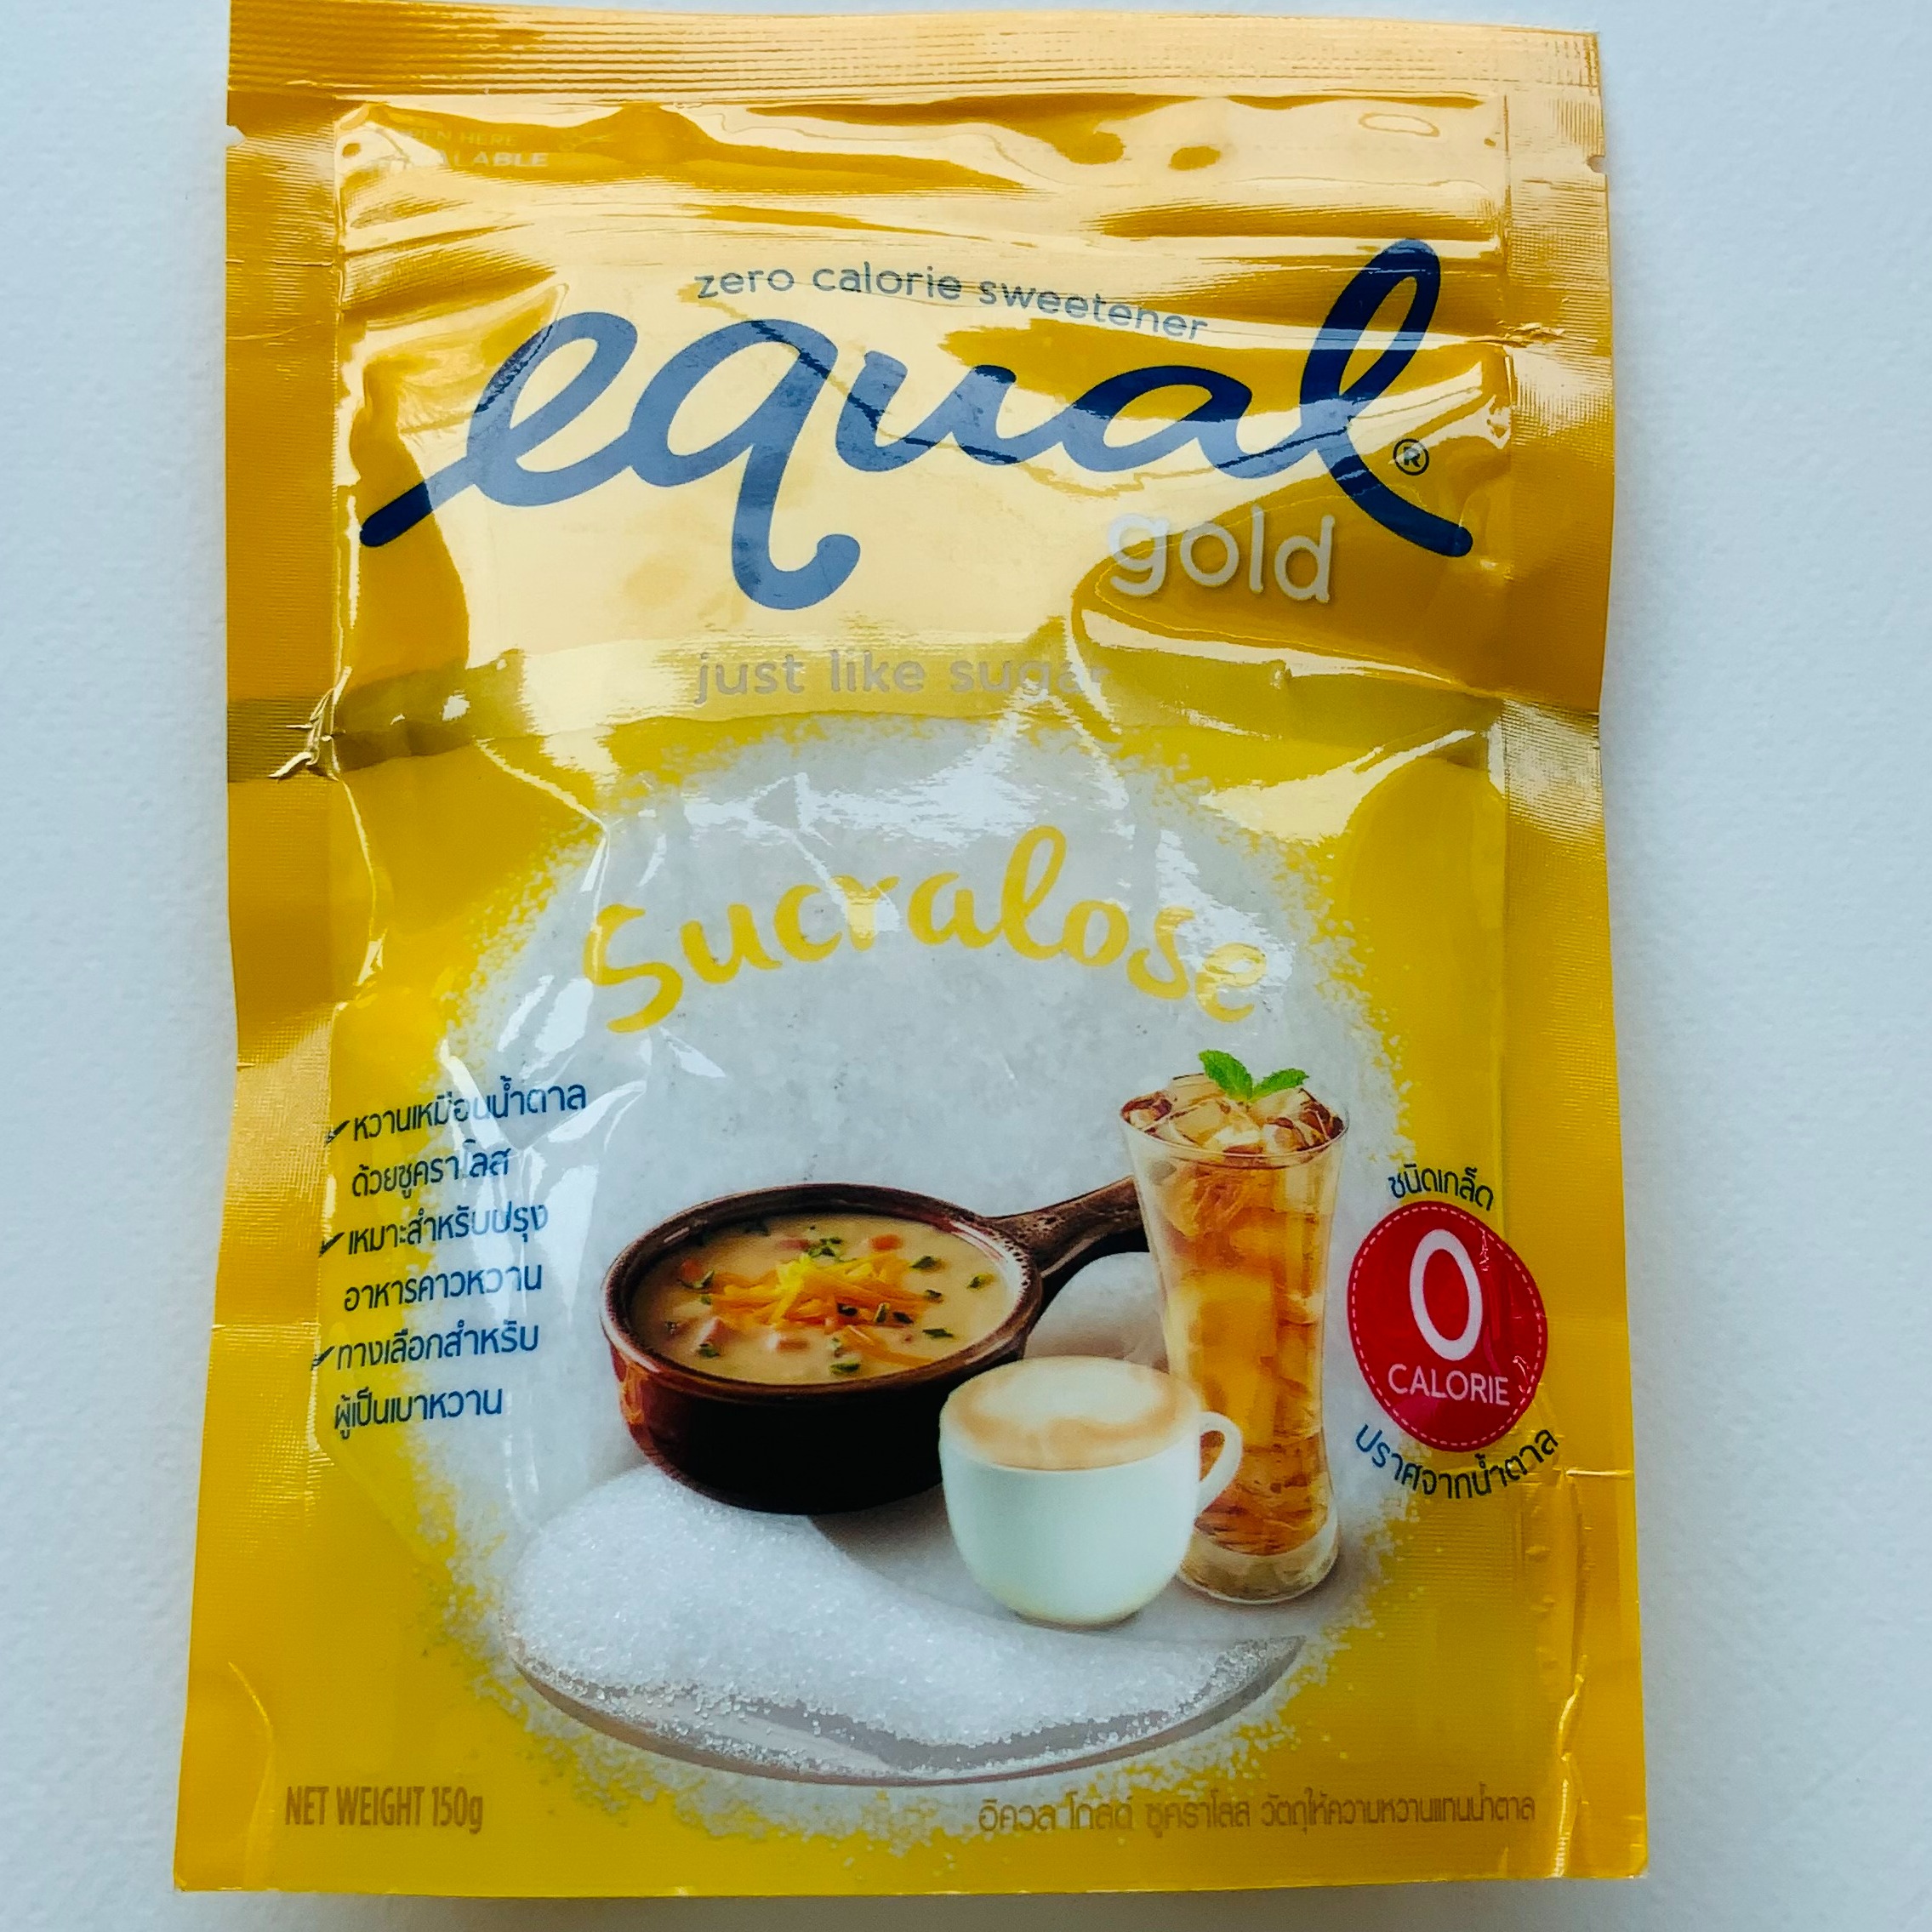 Equal Gold 150 g. อิควลโกลด์ ผลิตภัณฑ์ให้ความหวานแทนน้ำตาล  150 กรัม, 0 แคลอรี, เบาหวานทานได้, น้ำตาลเทียม, น้ำตาลสำหรับอบขนม, สารให้ความหวาน